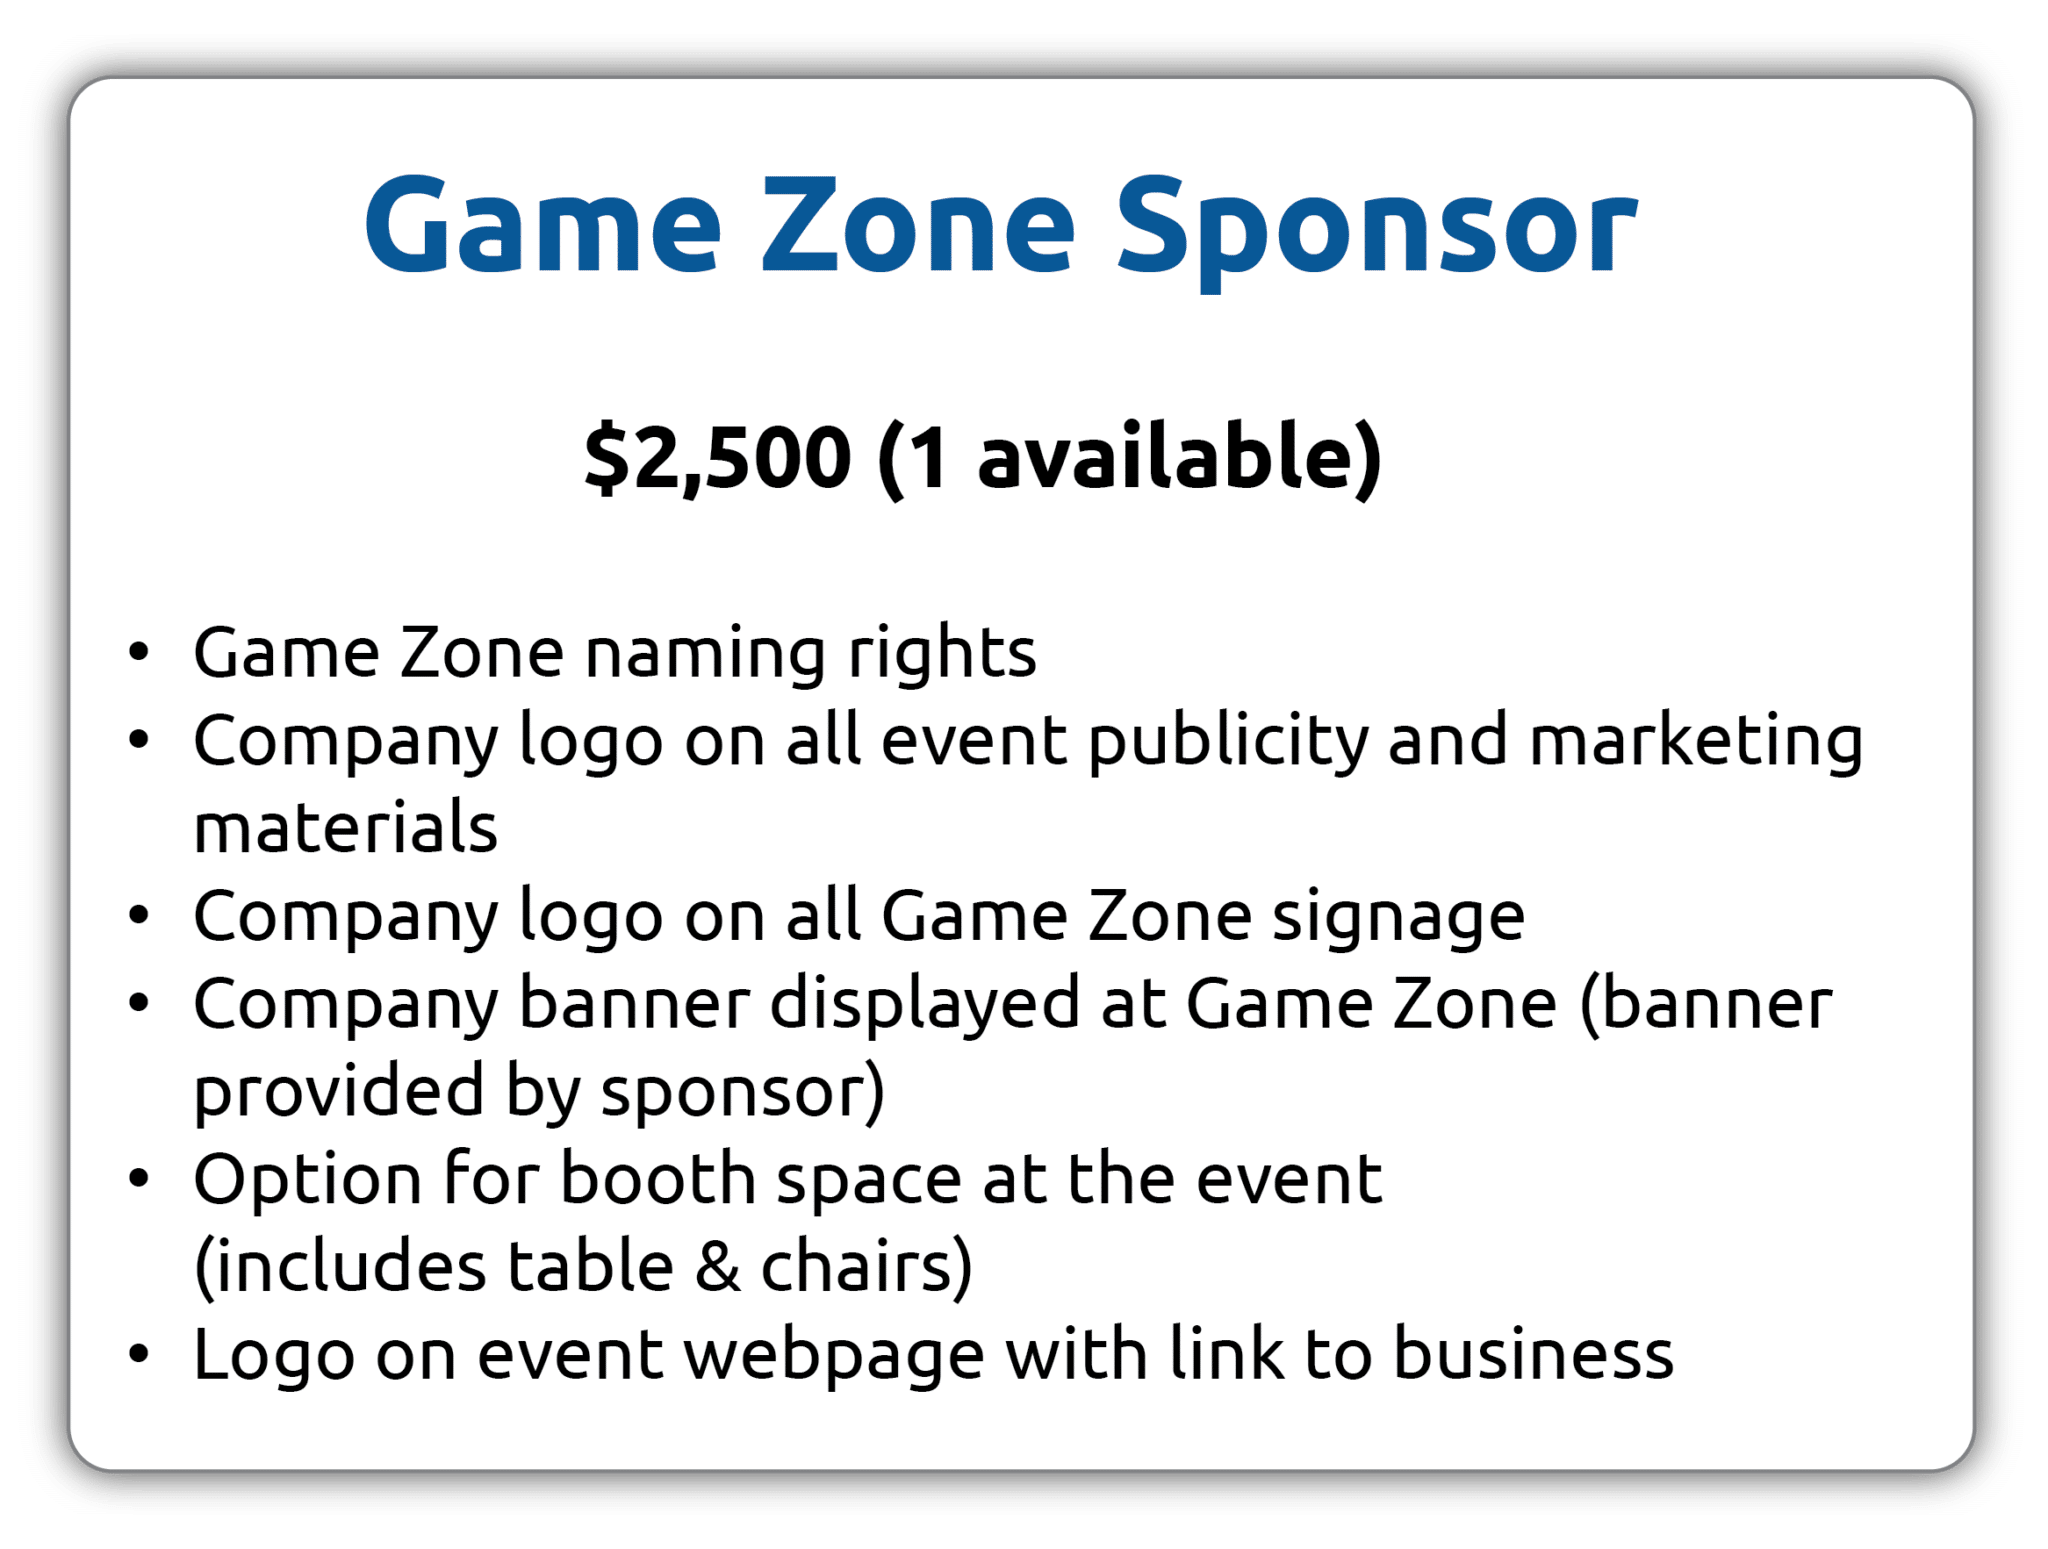 GameZoneSponsor